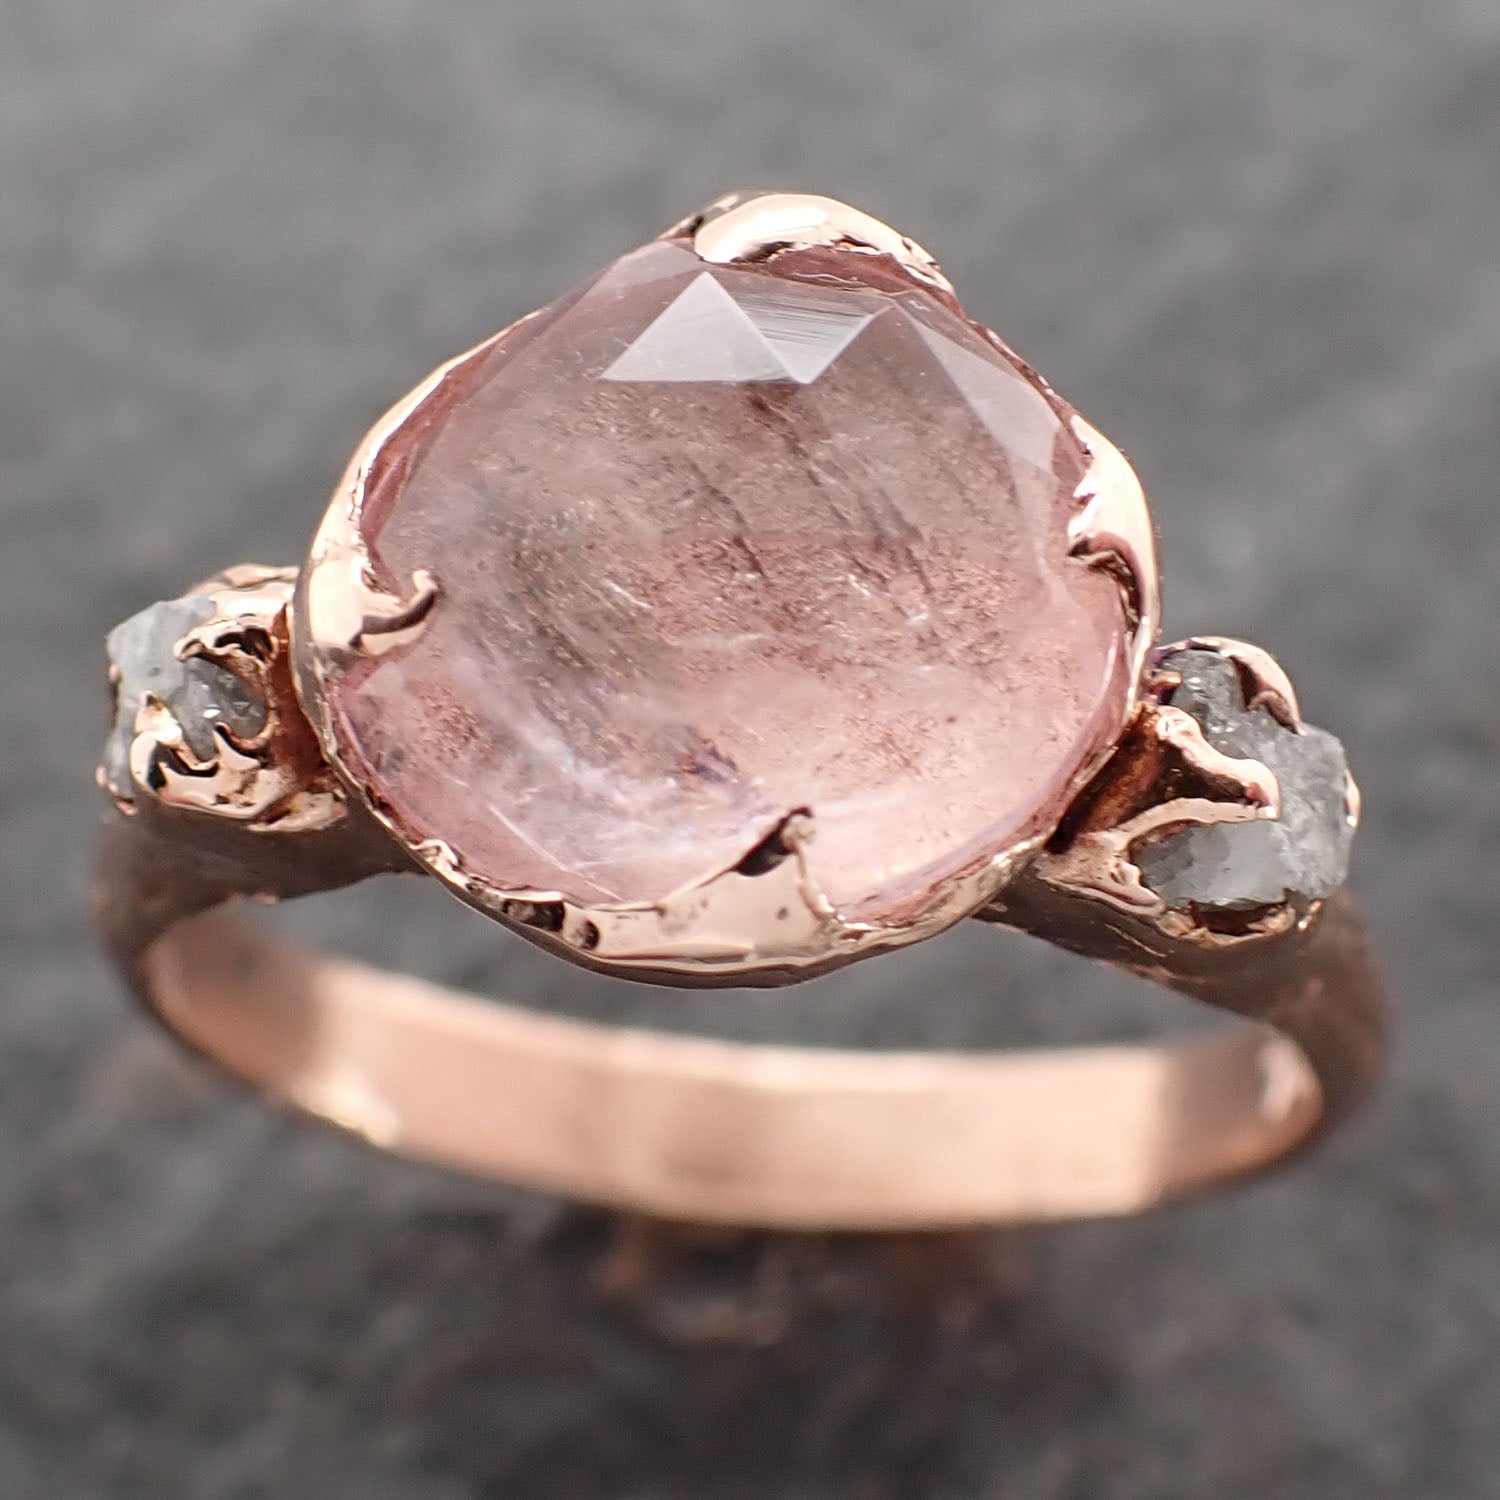 Fancy cut Morganite Rough Diamond 14k Rose Gold Engagement Ring Multi stone Wedding Ring Custom One Of a Kind Gemstone Ring Bespoke Pink Conflict Free 2628